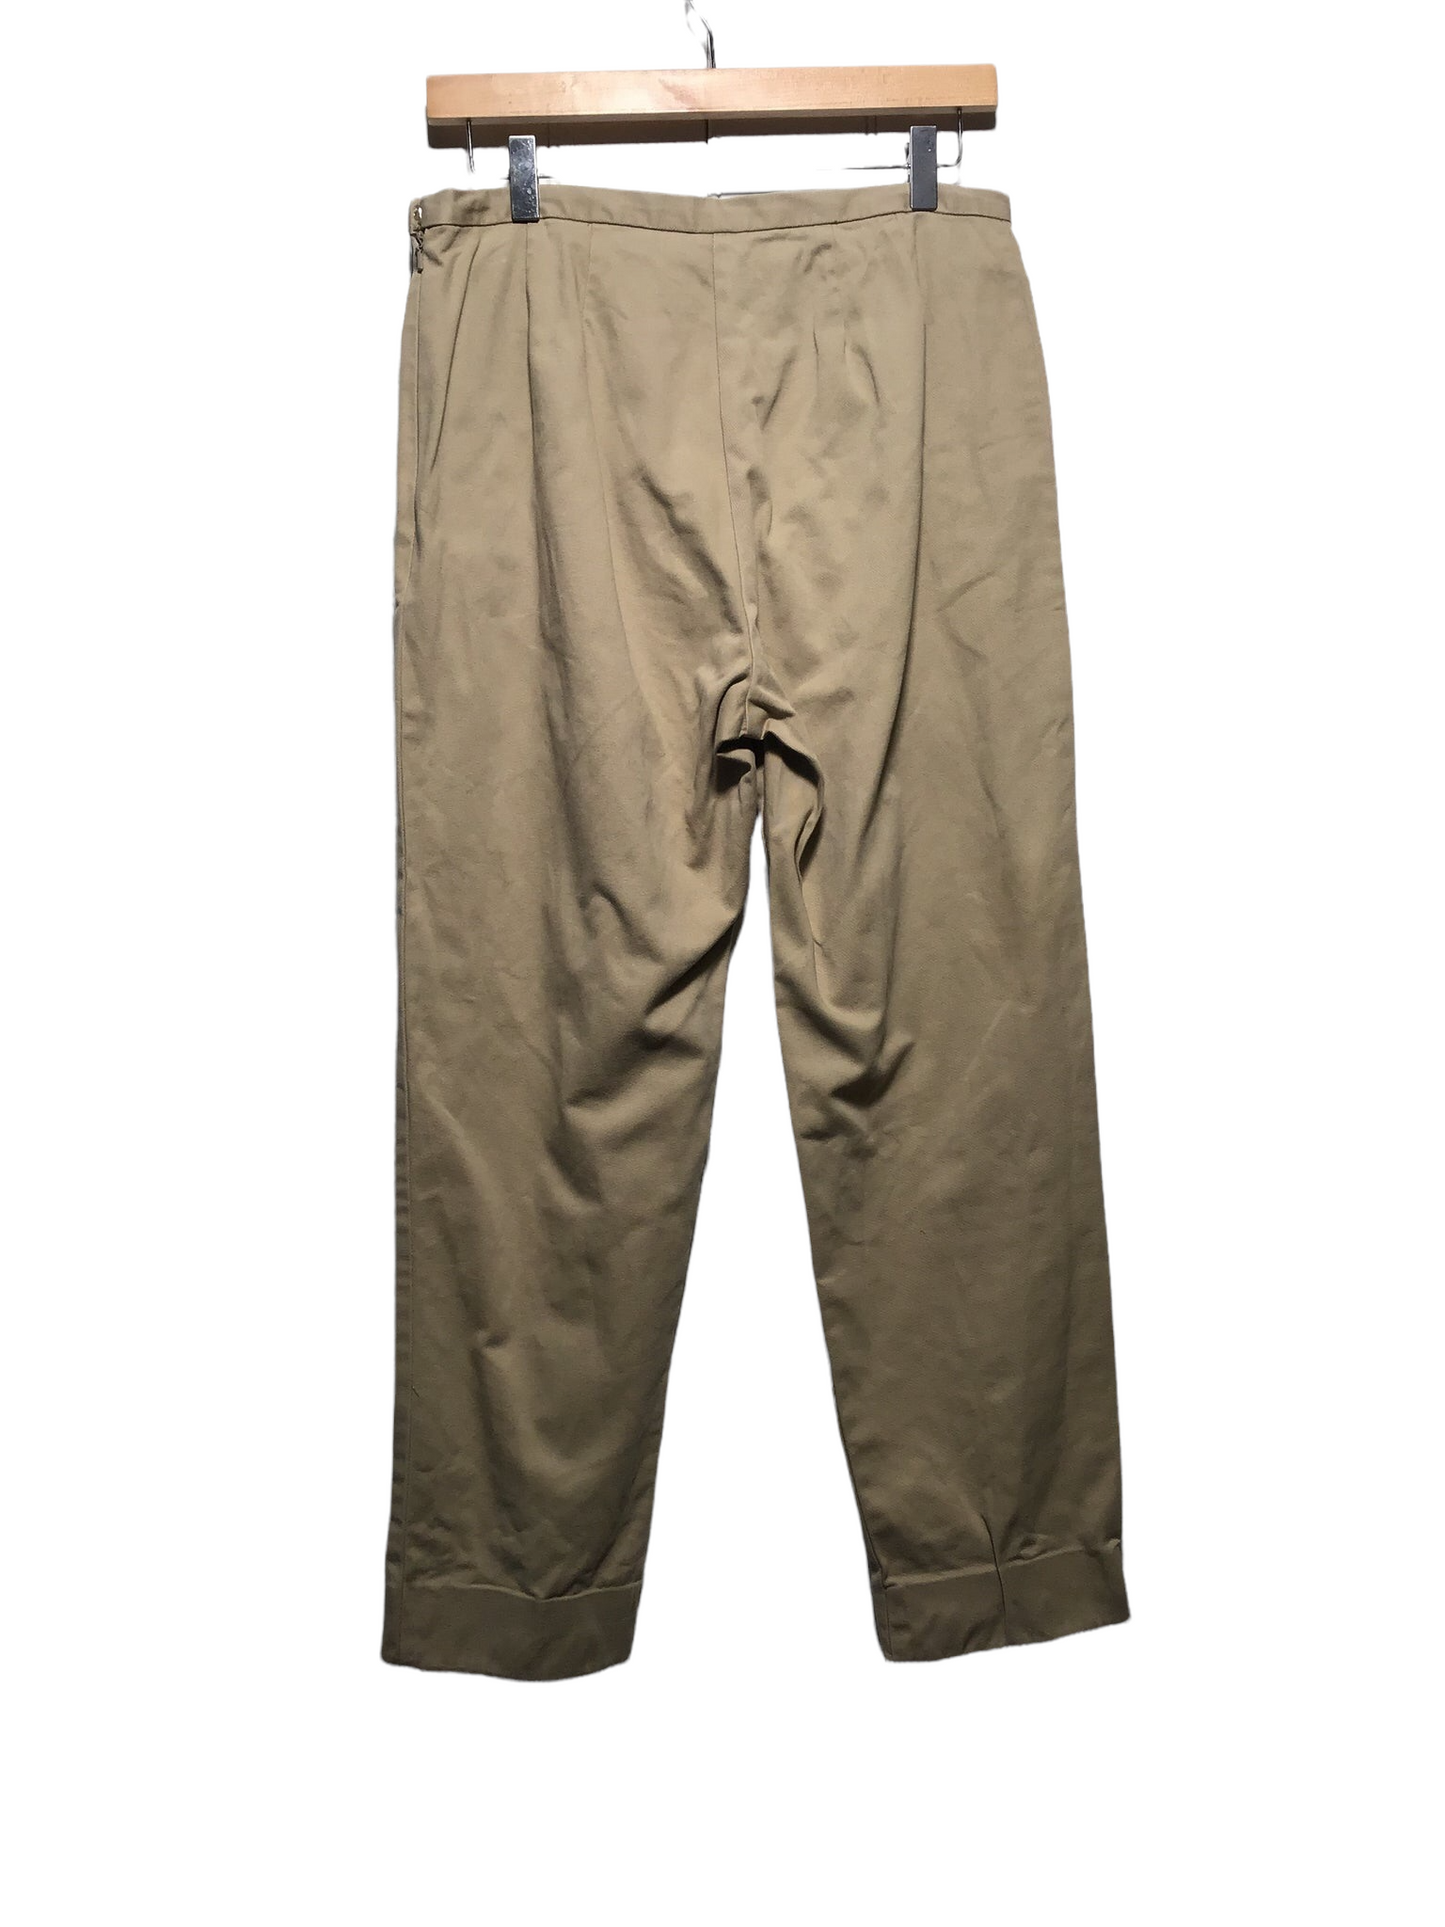 Gap Slim Cotton Trousers (Size M)